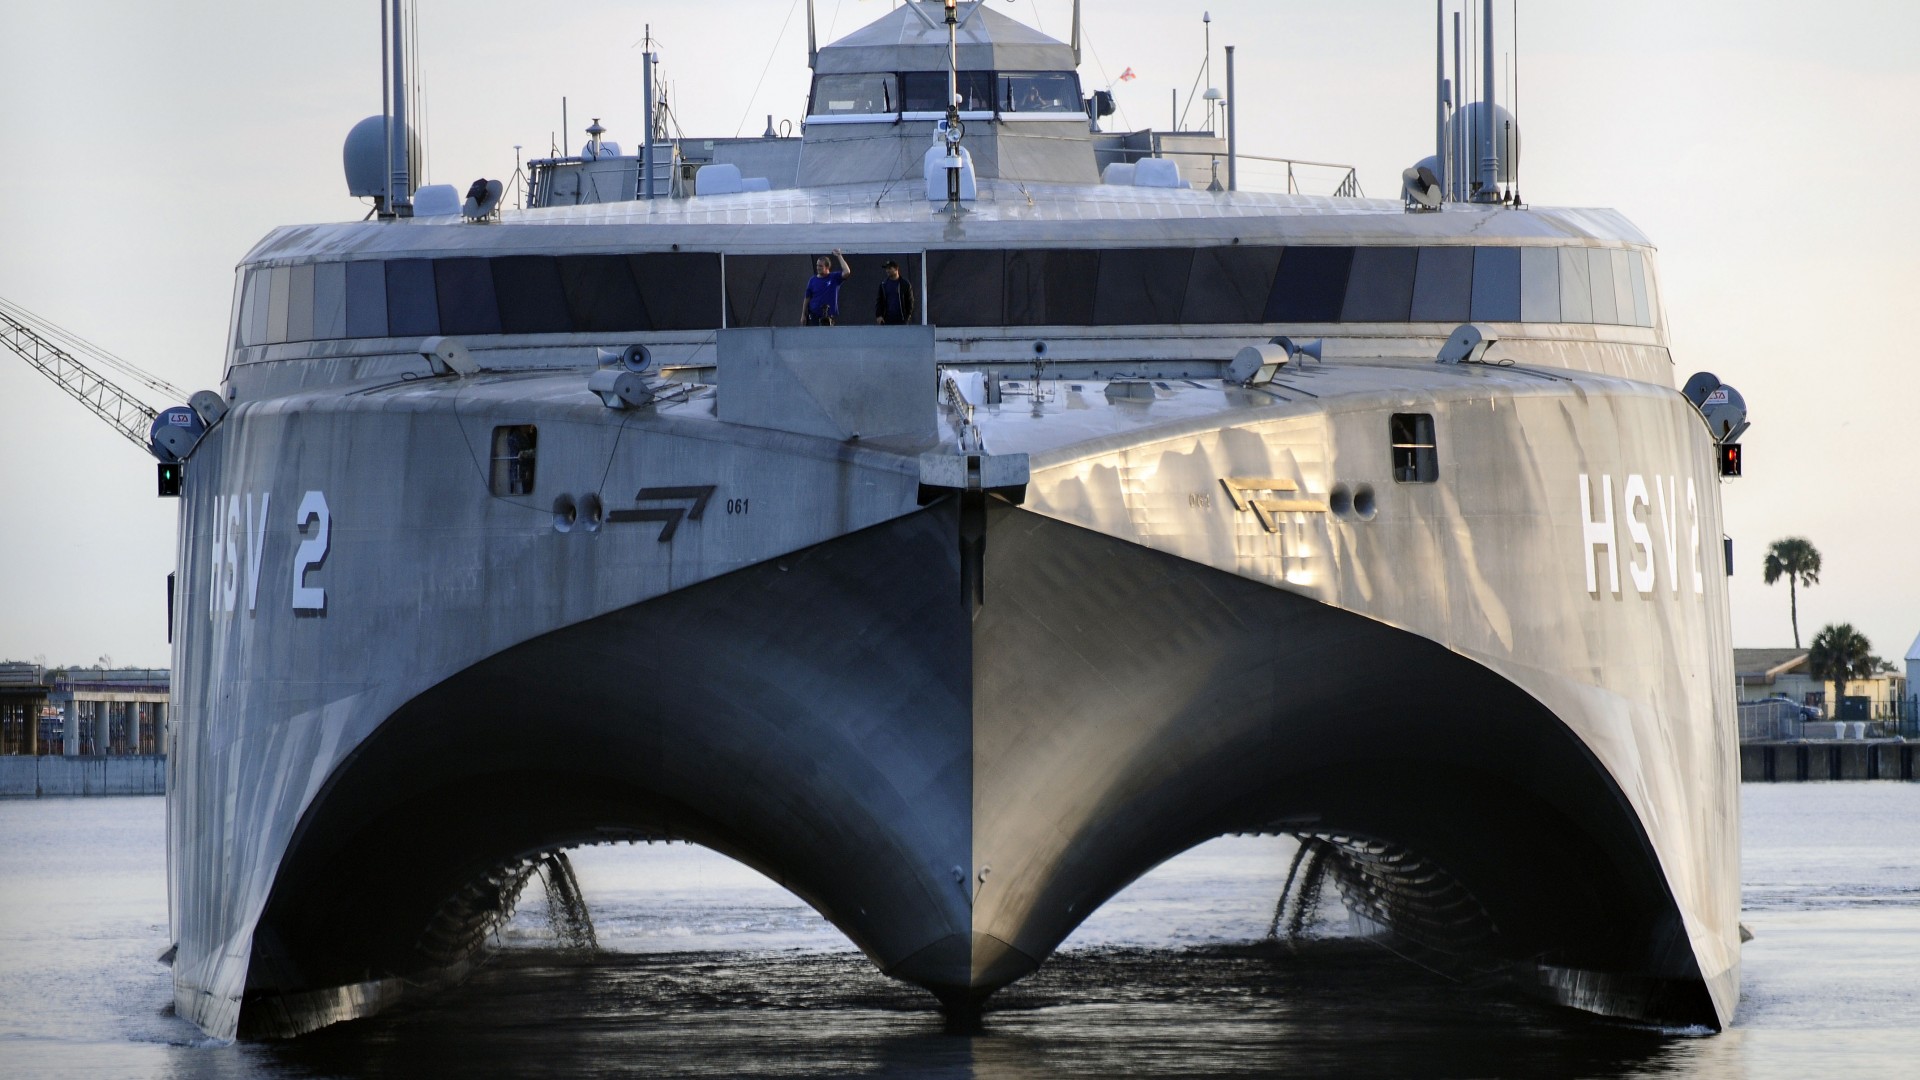 катамаран, ВМФ США, Армия США, HSV-2 Swift, catamaran, U.S. Navy, High Speed Vessel, USAV, U.S. Army, sea (horizontal)